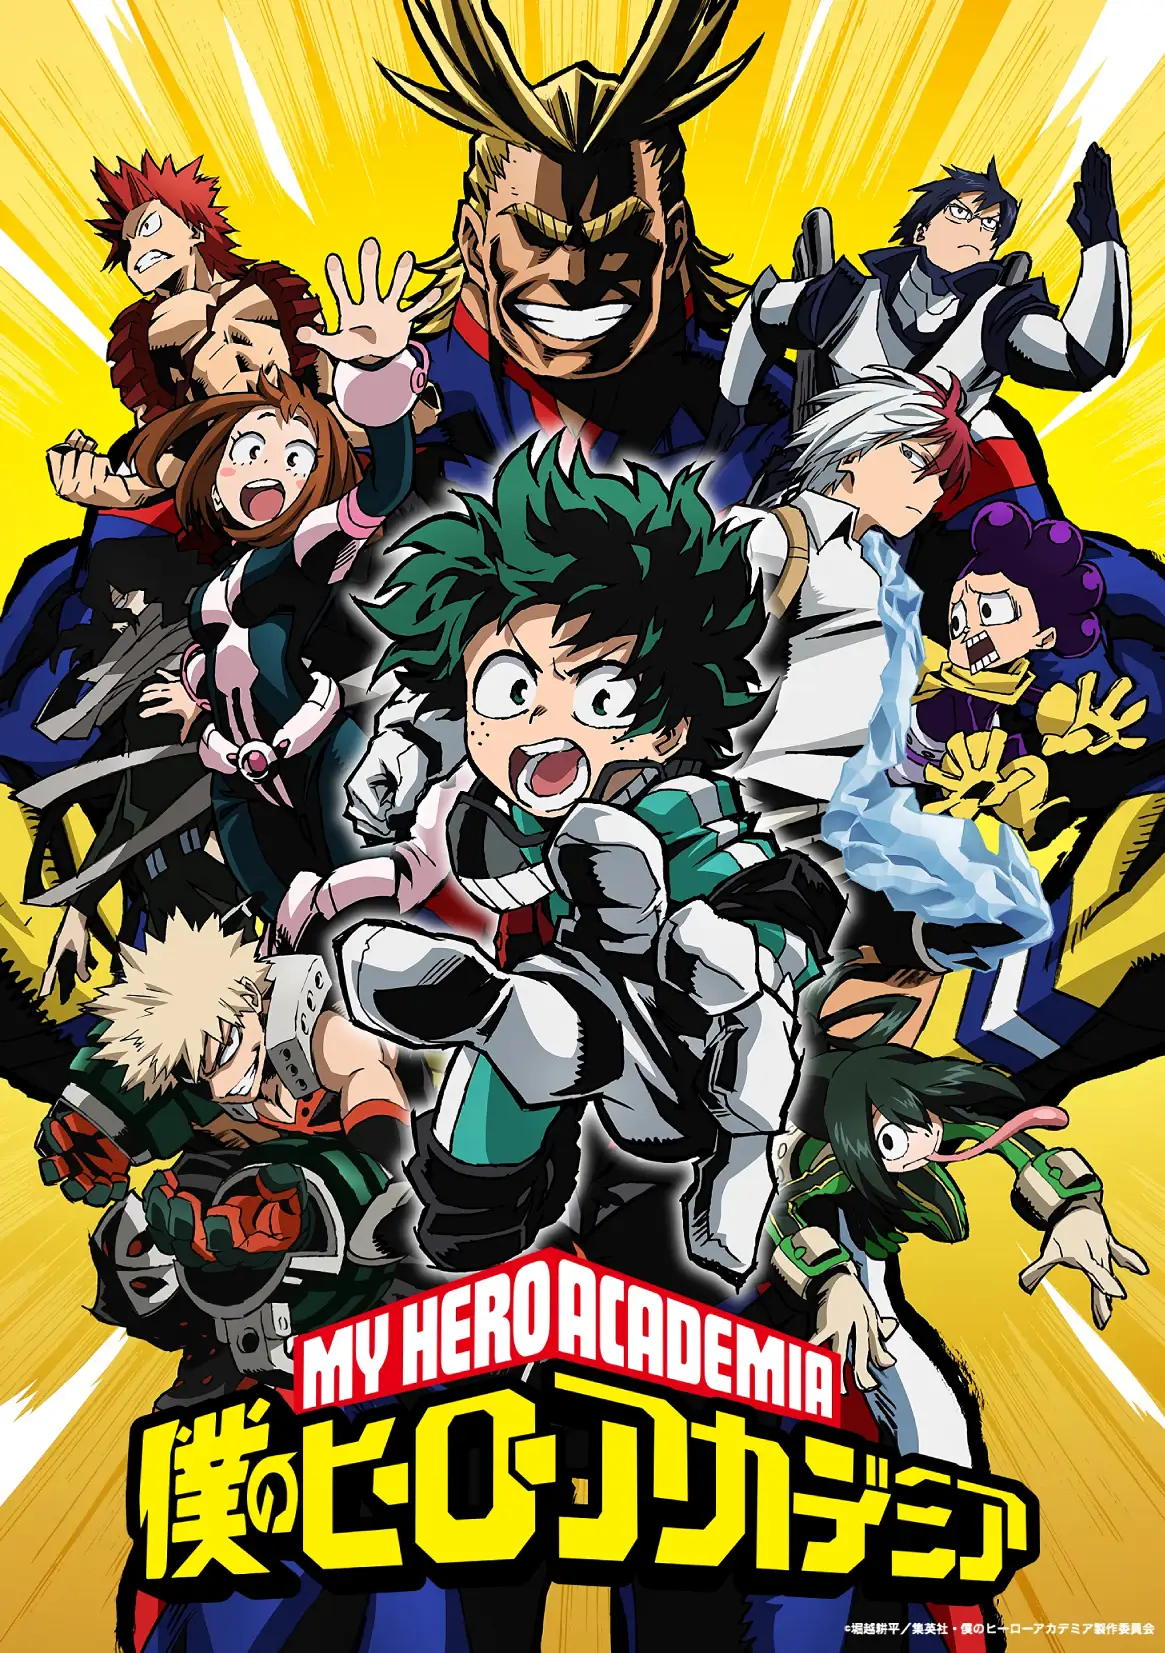 Boku No Hero Academia (My Hero Academia) Anime Visual